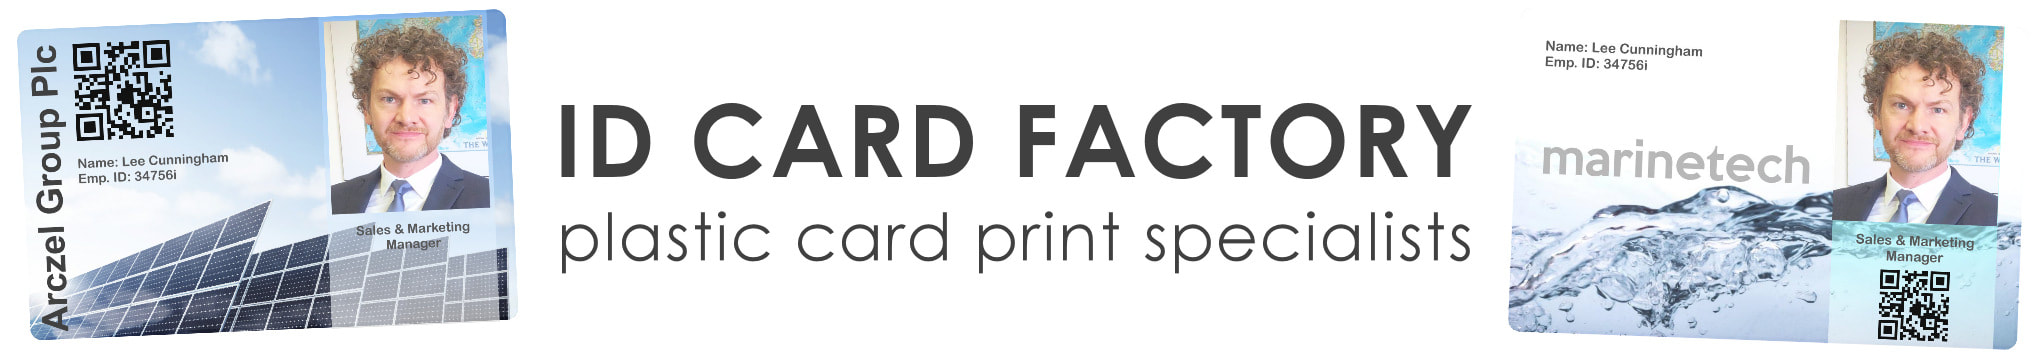 West Bromwich ID card printing | staff photo ID cards | company employee ID card print service | Local Identity Card Printing | Custom Design 